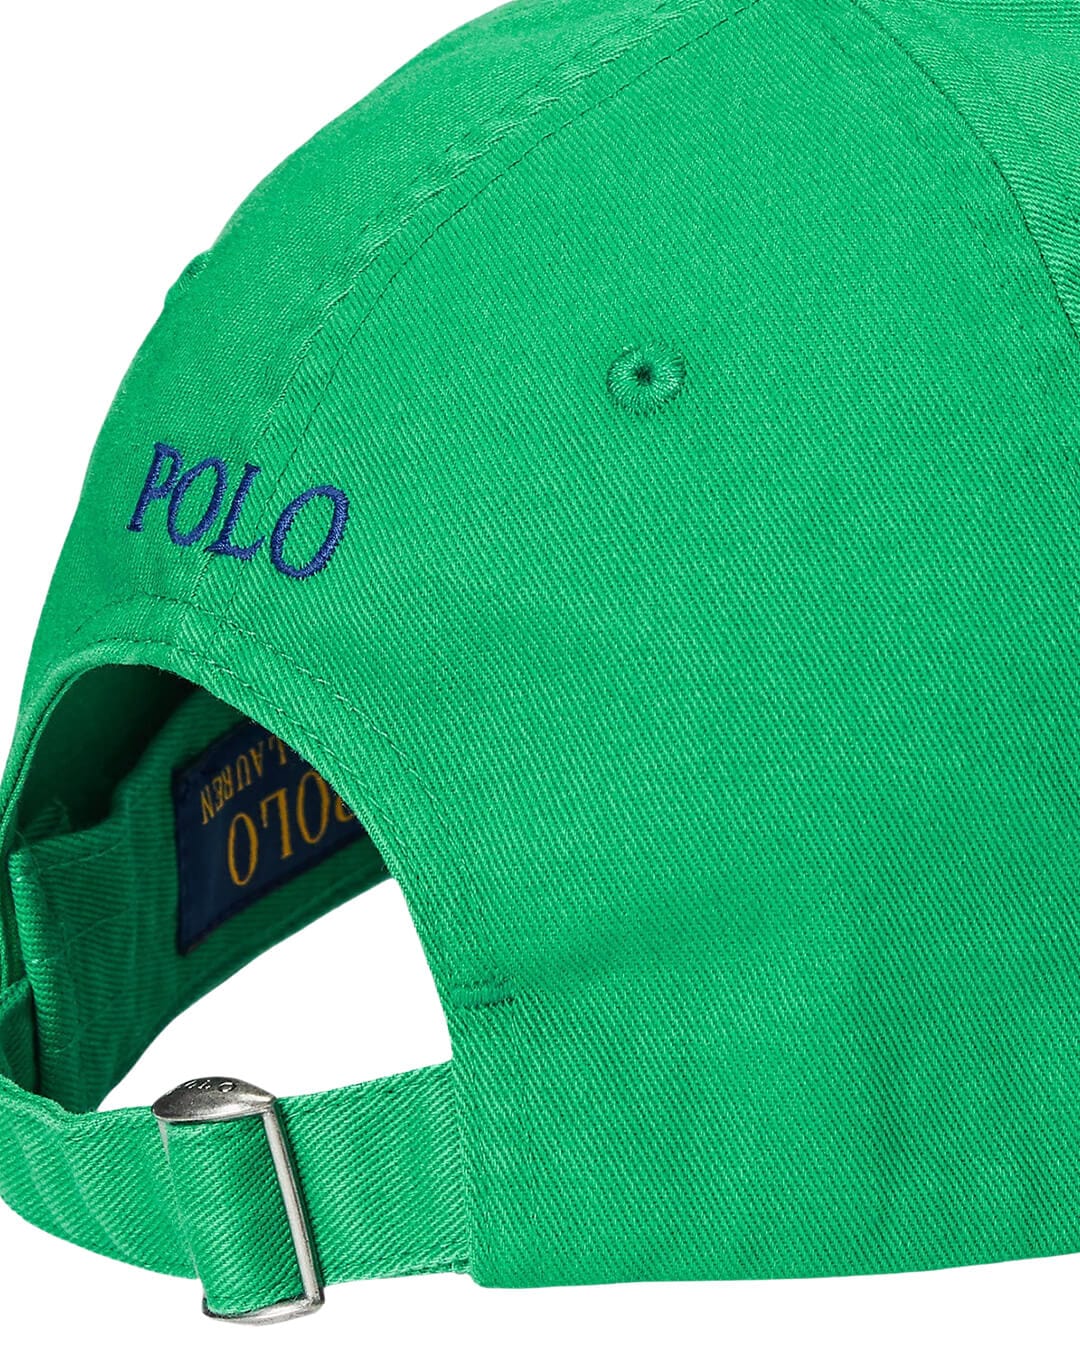 Polo Ralph Lauren Caps ONE SIZE Polo Ralph Lauren Cotton Chino Ball Green Cap